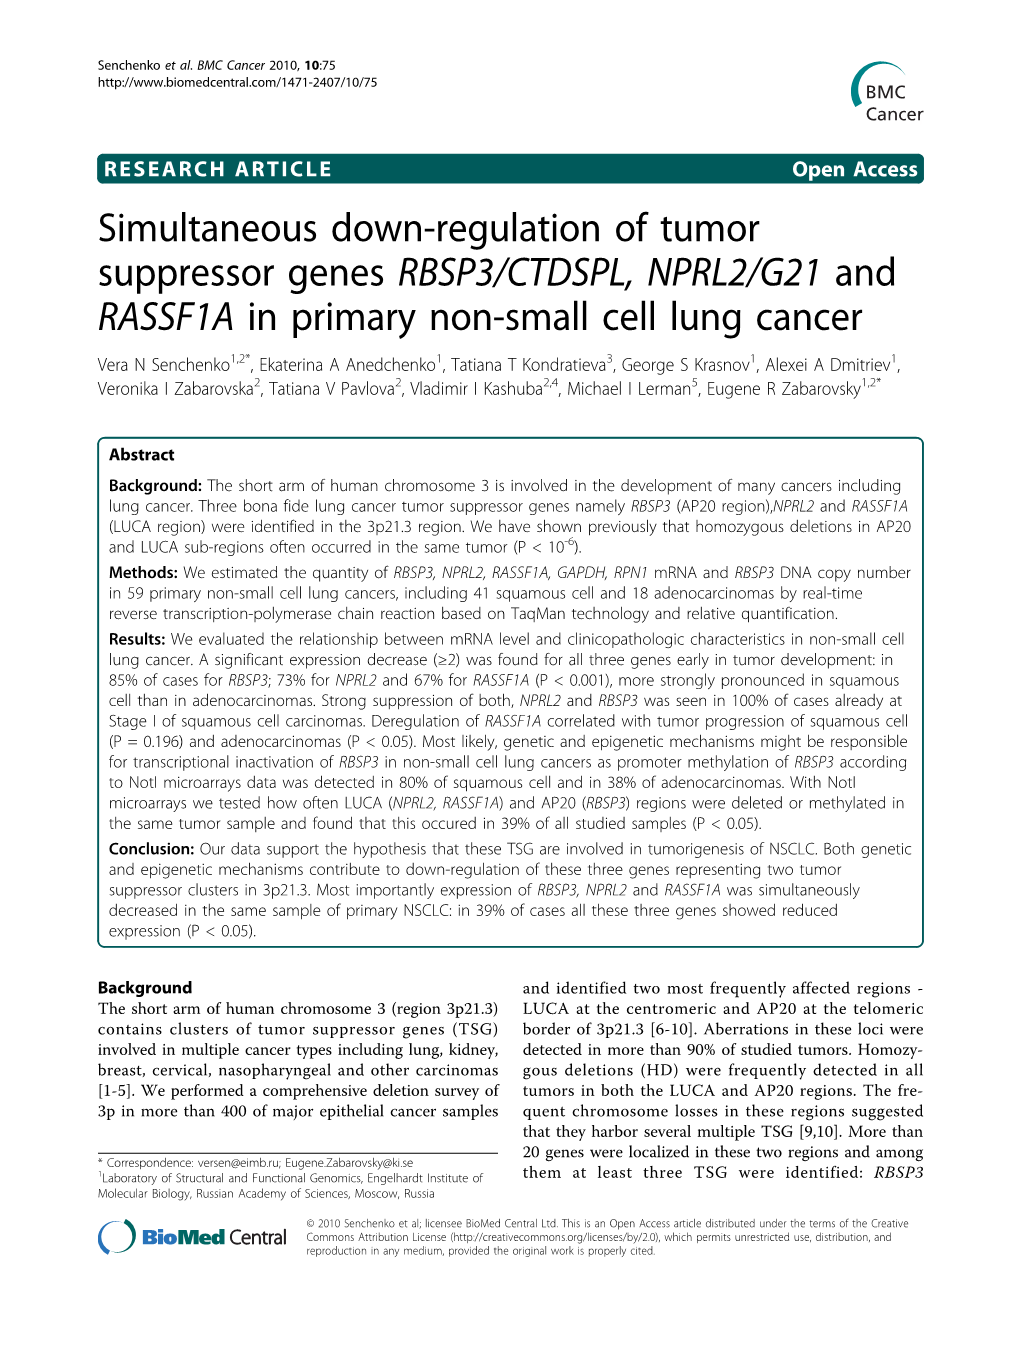 Simultaneous Down-Regulation of Tumor Suppressor Genes RBSP3